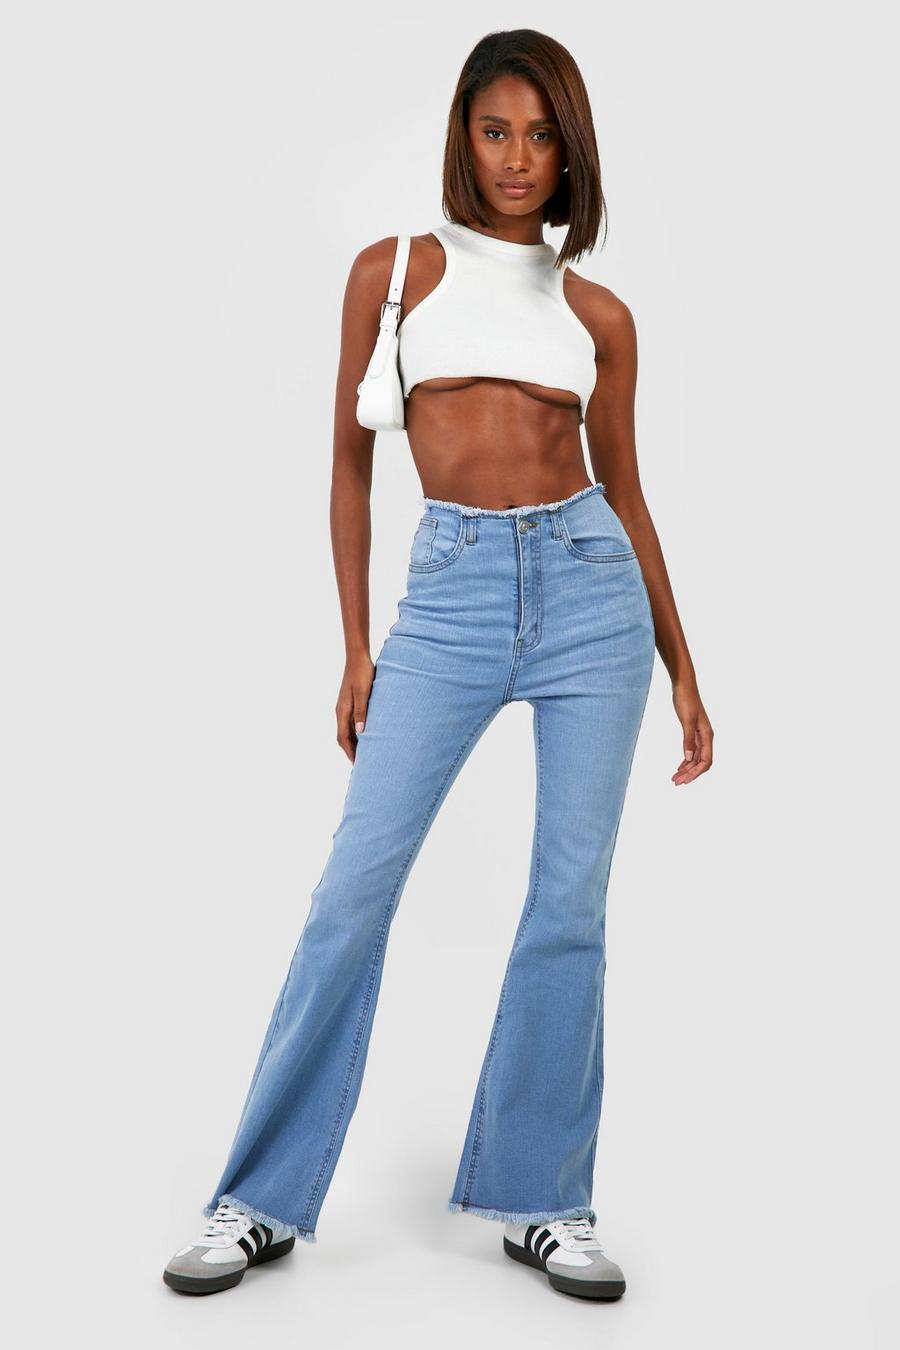 https://media.boohoo.com/i/boohoo/gzz61575_light%20blue_xl/female-light%20blue-basic-high-rise-flared-jeans-/?w=900&qlt=default&fmt.jp2.qlt=70&fmt=auto&sm=fit